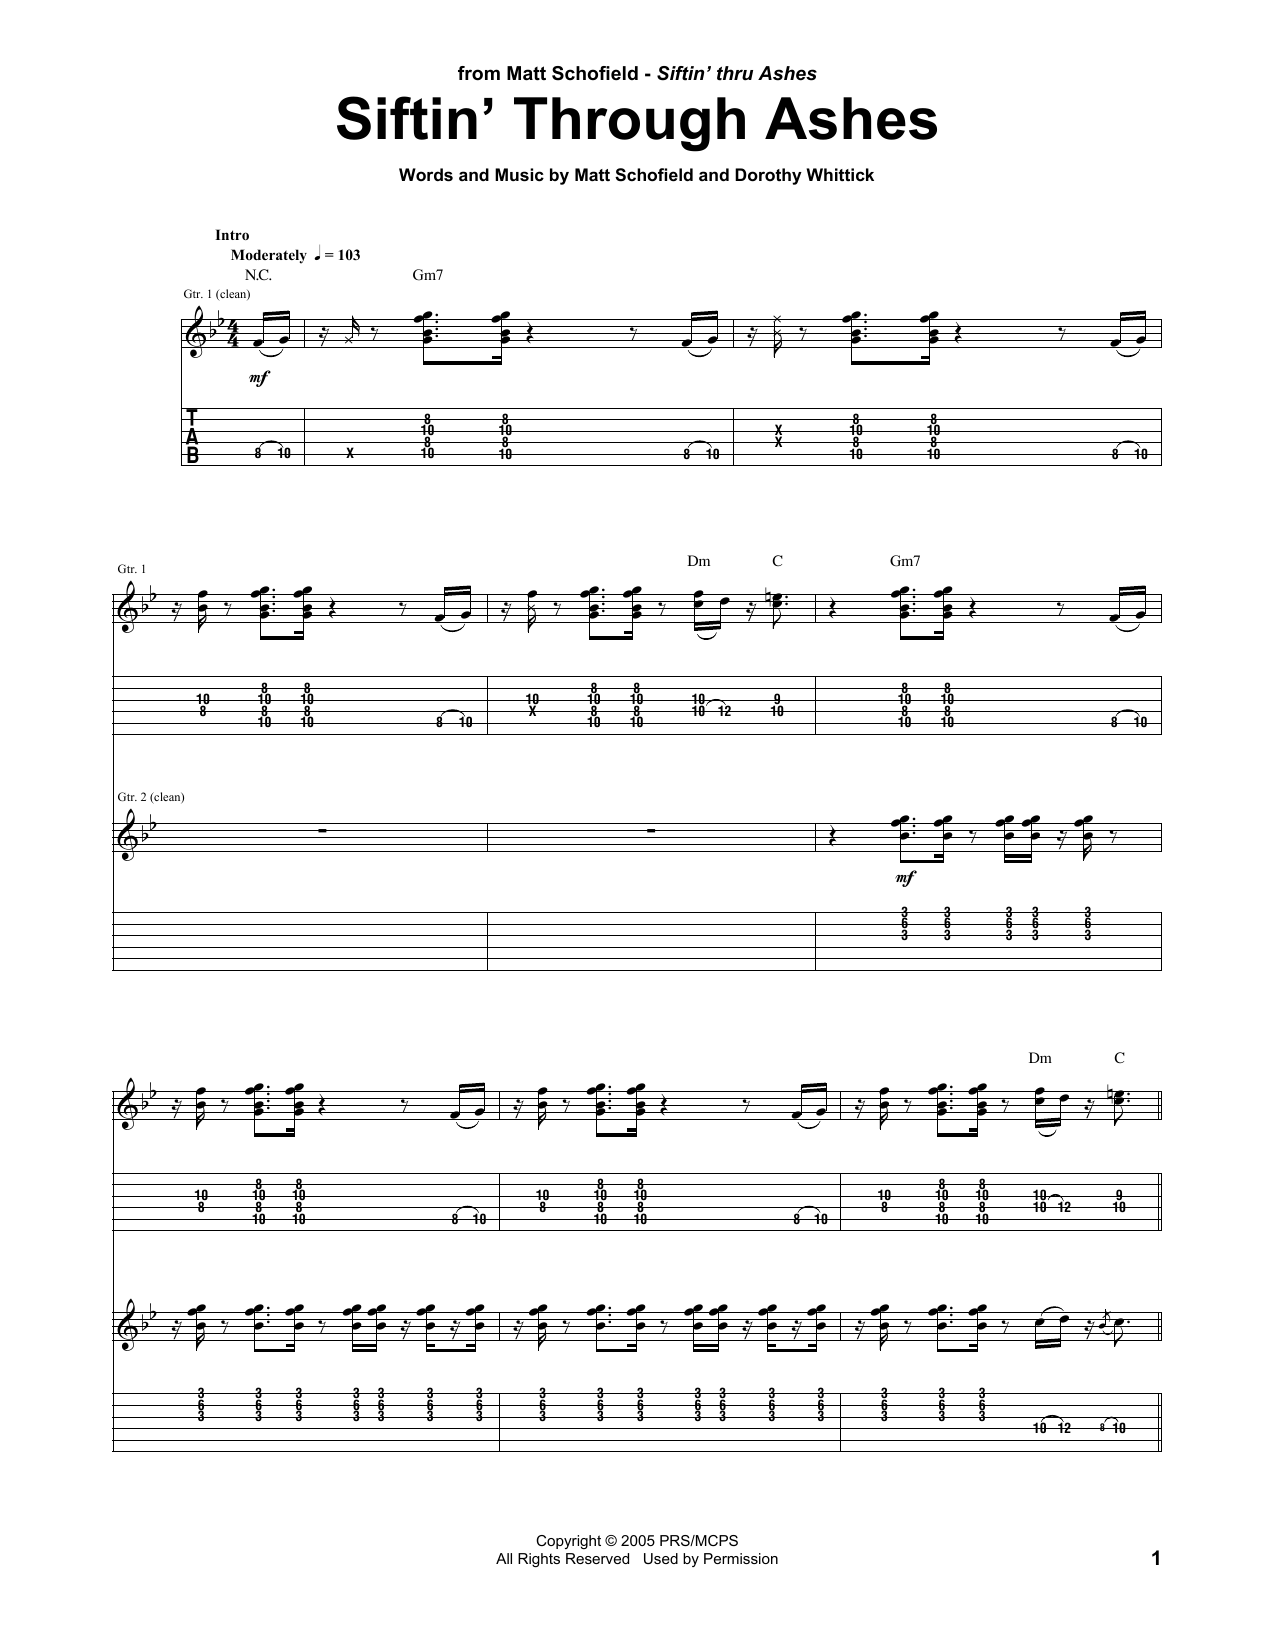 Matt Schofield Siftin' Through Ashes Sheet Music Notes & Chords for Guitar Tab - Download or Print PDF